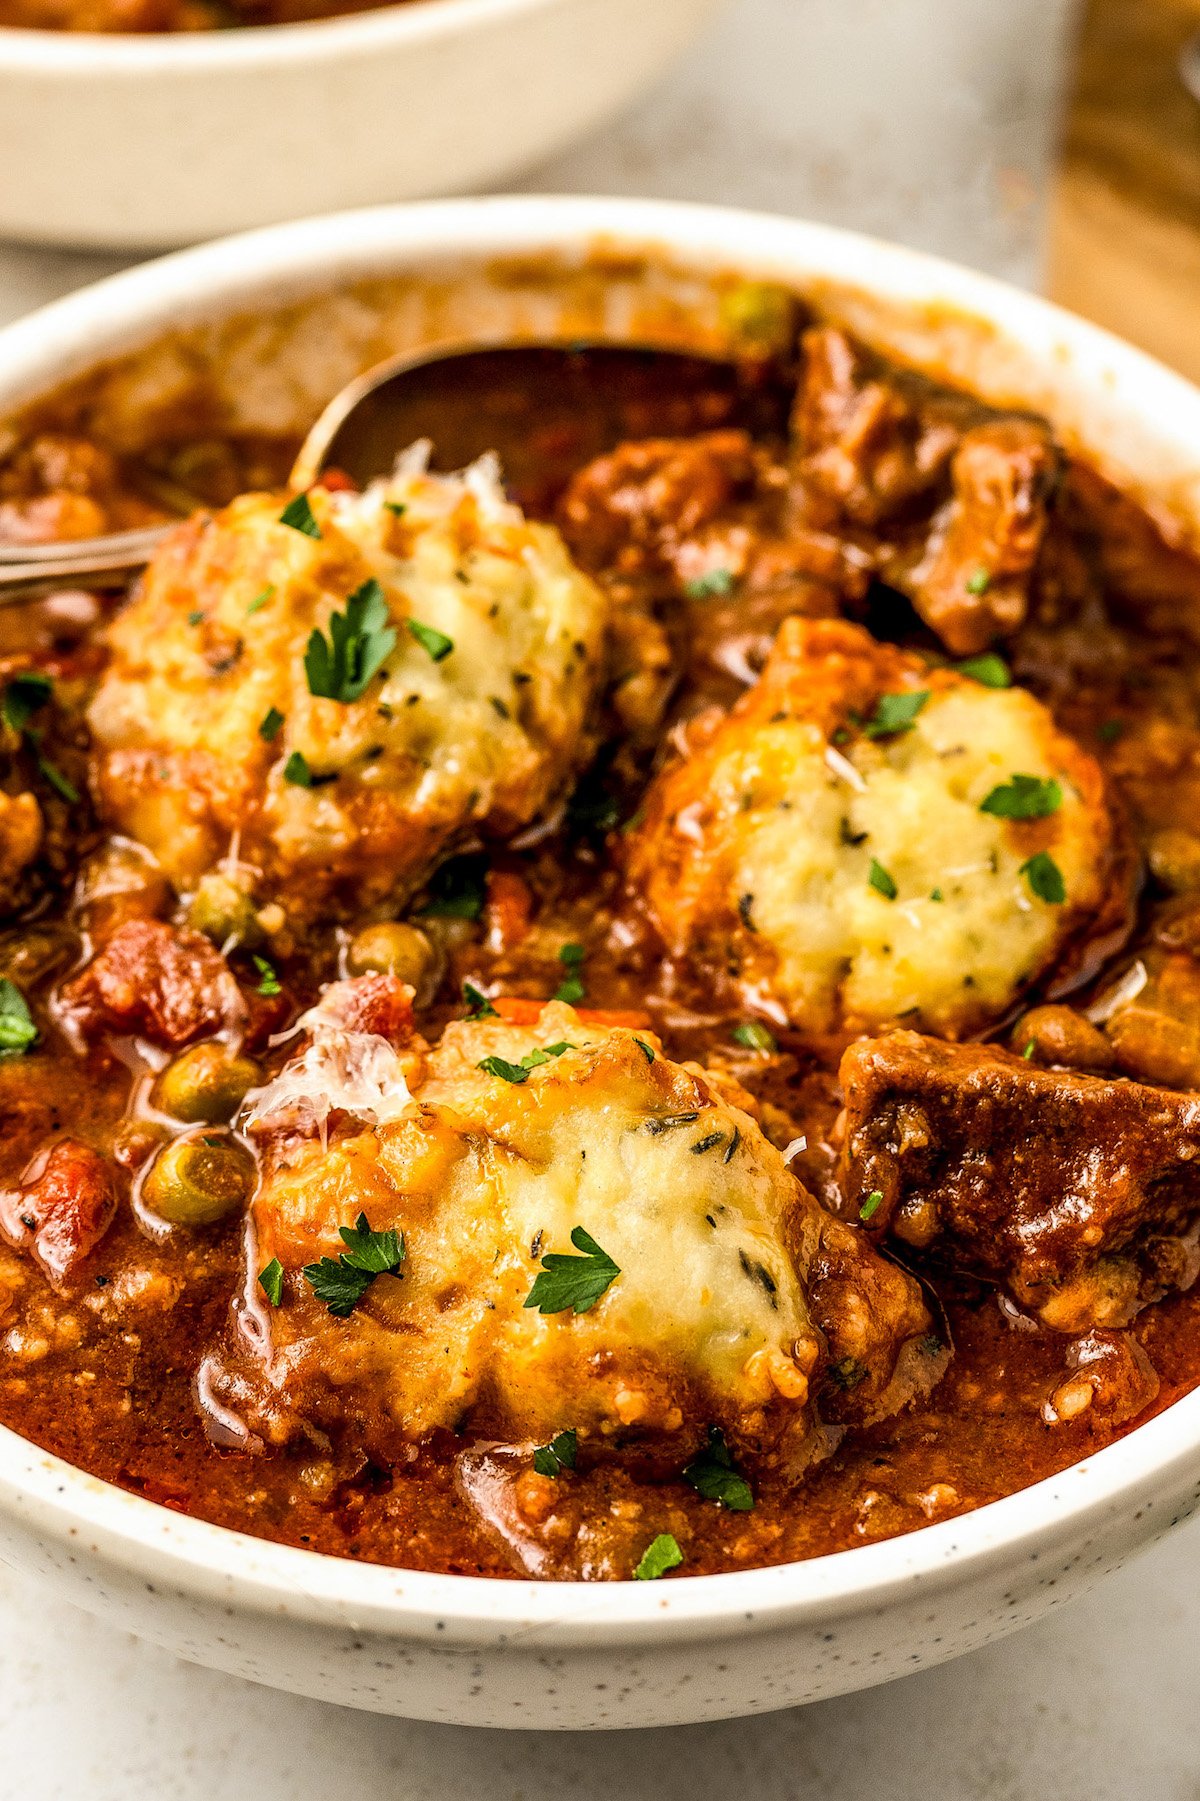 Crockpot Beef Stew with Dumplings | The Novice Chef